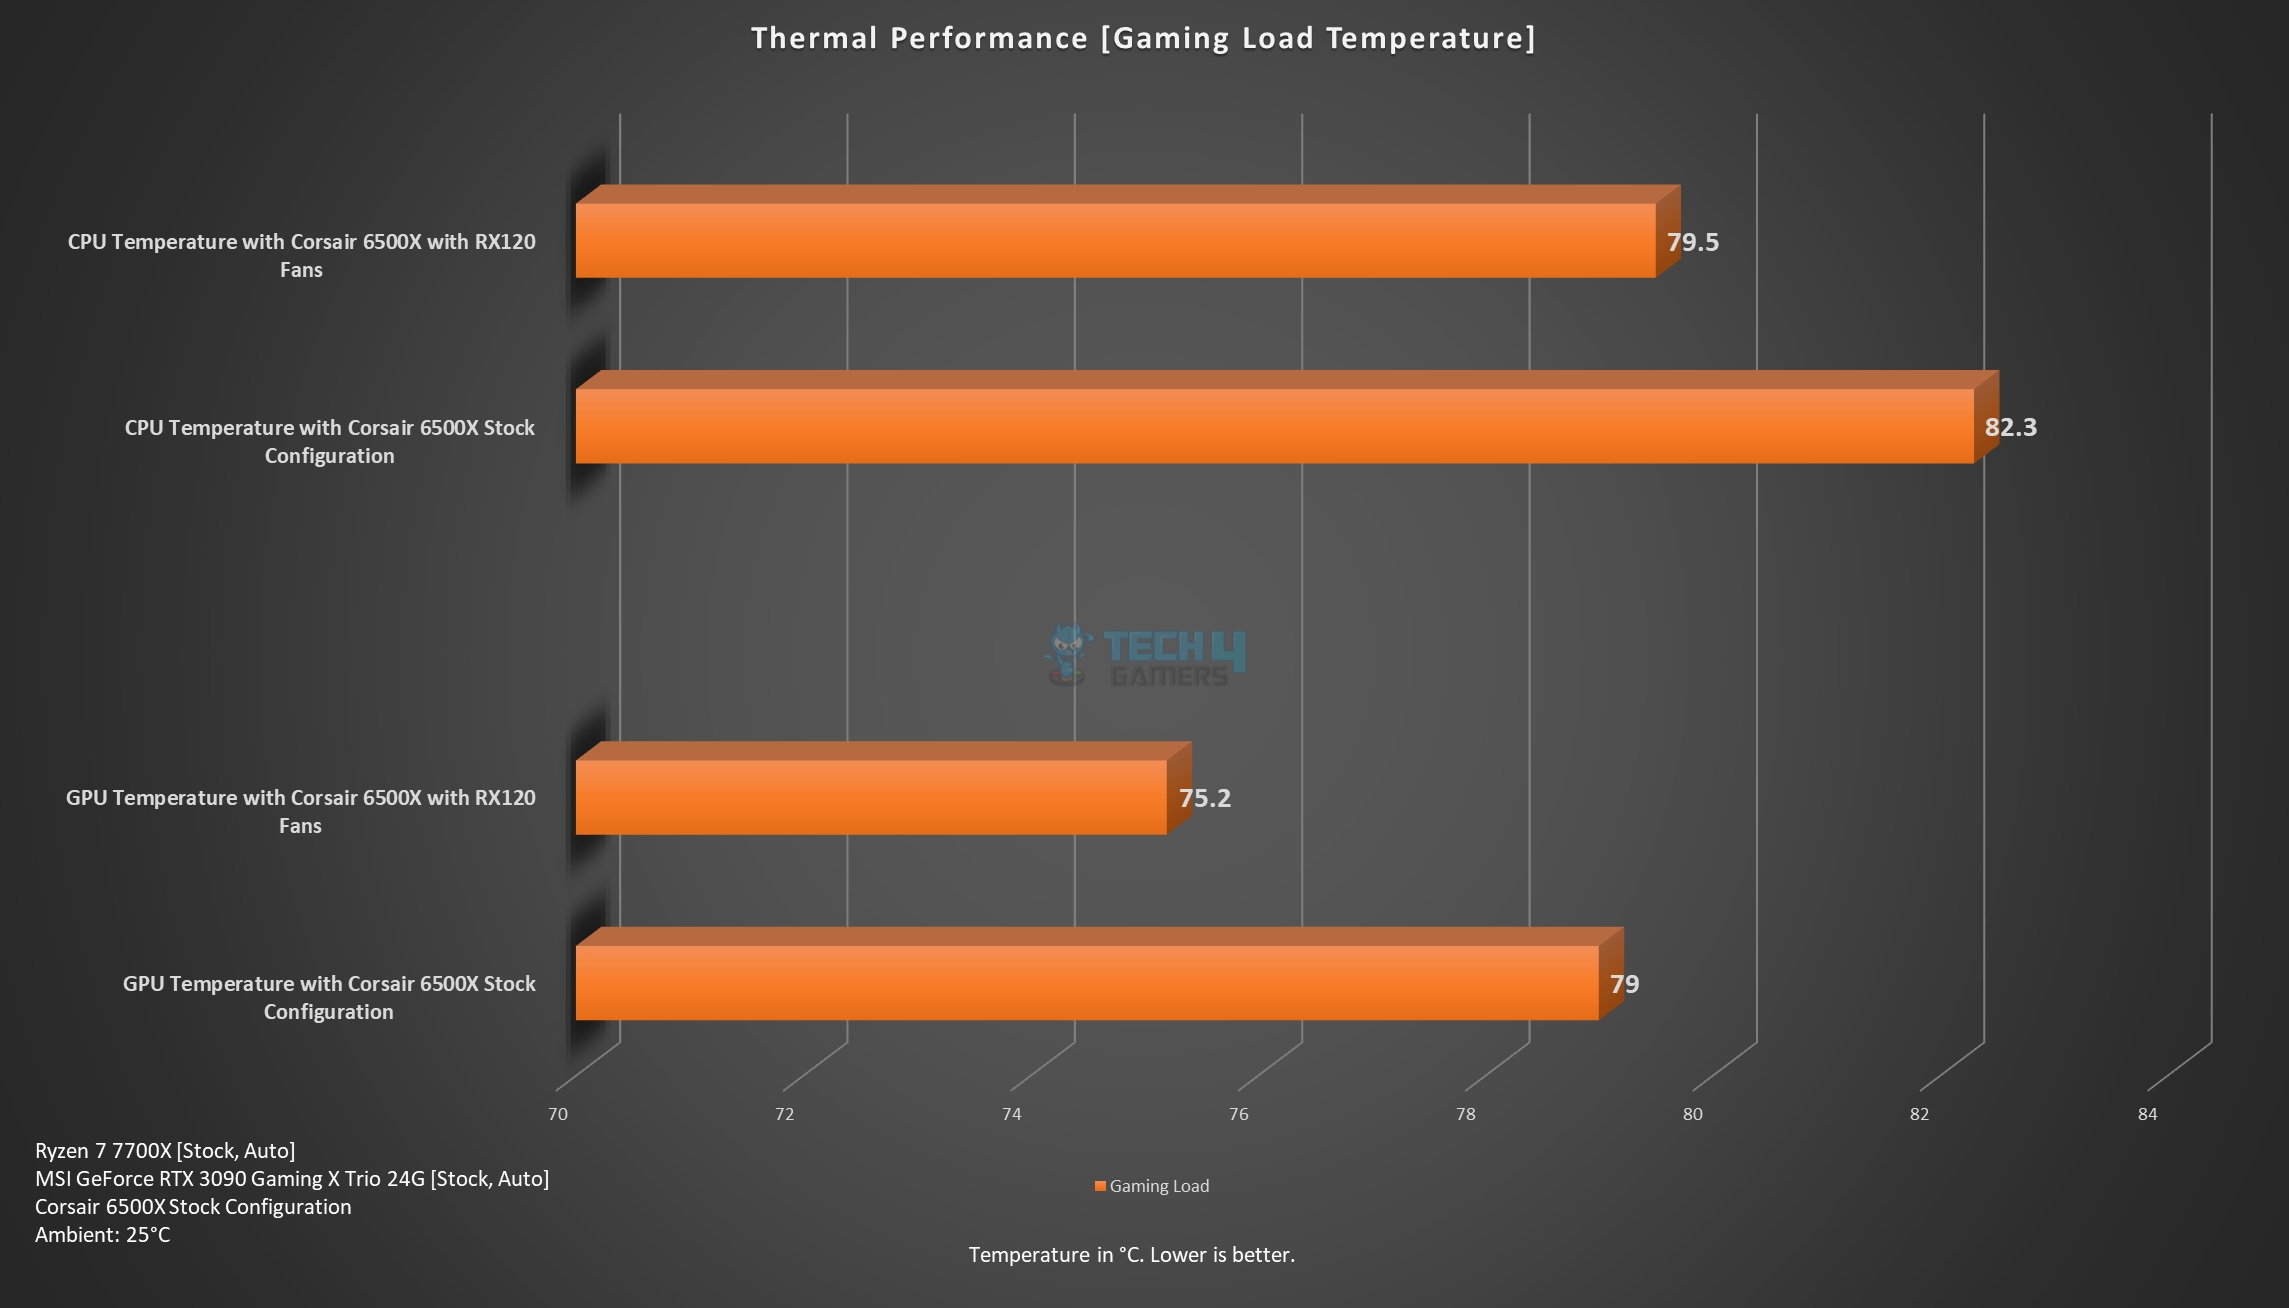 Corsair 6500X — Thermal Performance Gaming Load